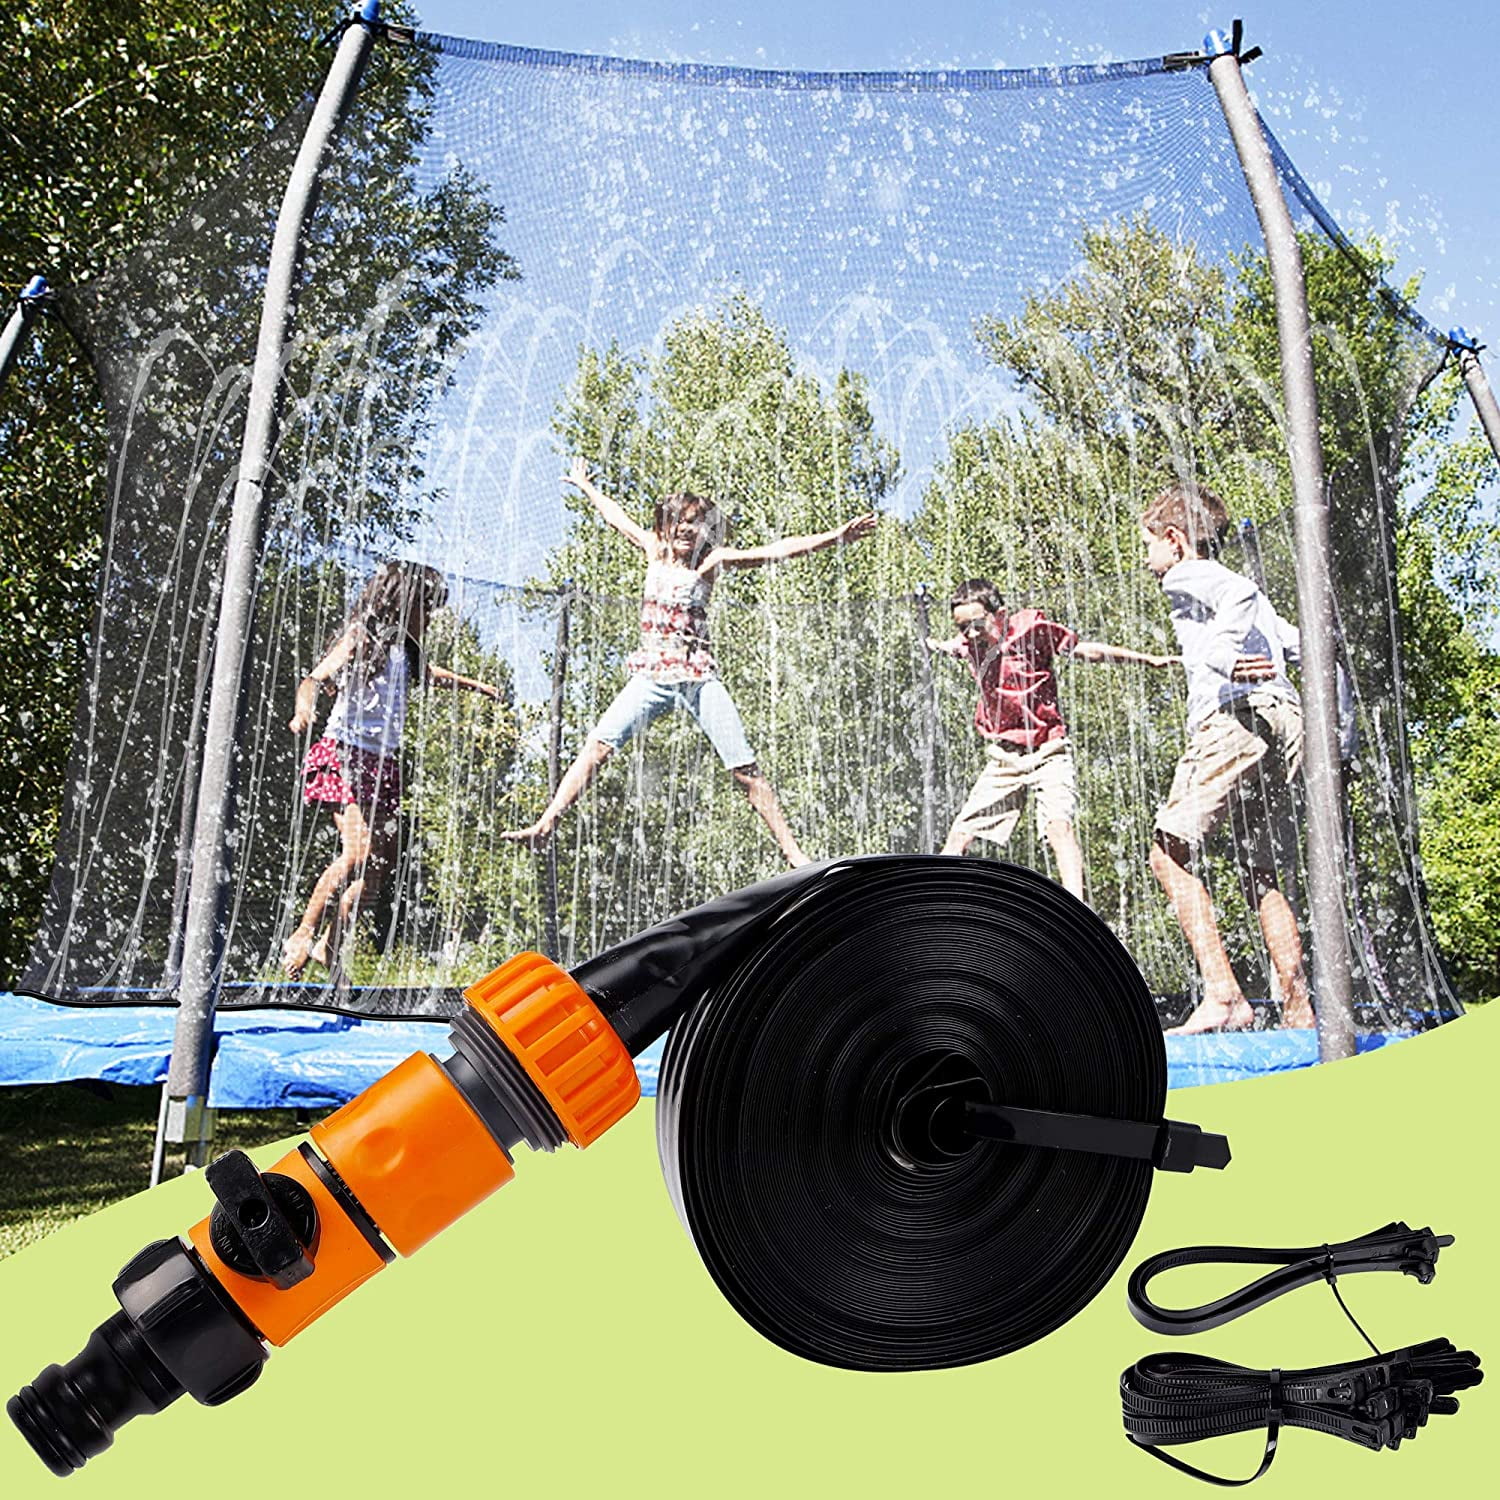 Trampoline Sprinkler, Outdoor Water Park Sprinkler for Kids Summer Fun, Outside Water Toy Attached on Trampoline Safety Net Enclosure (26ft)